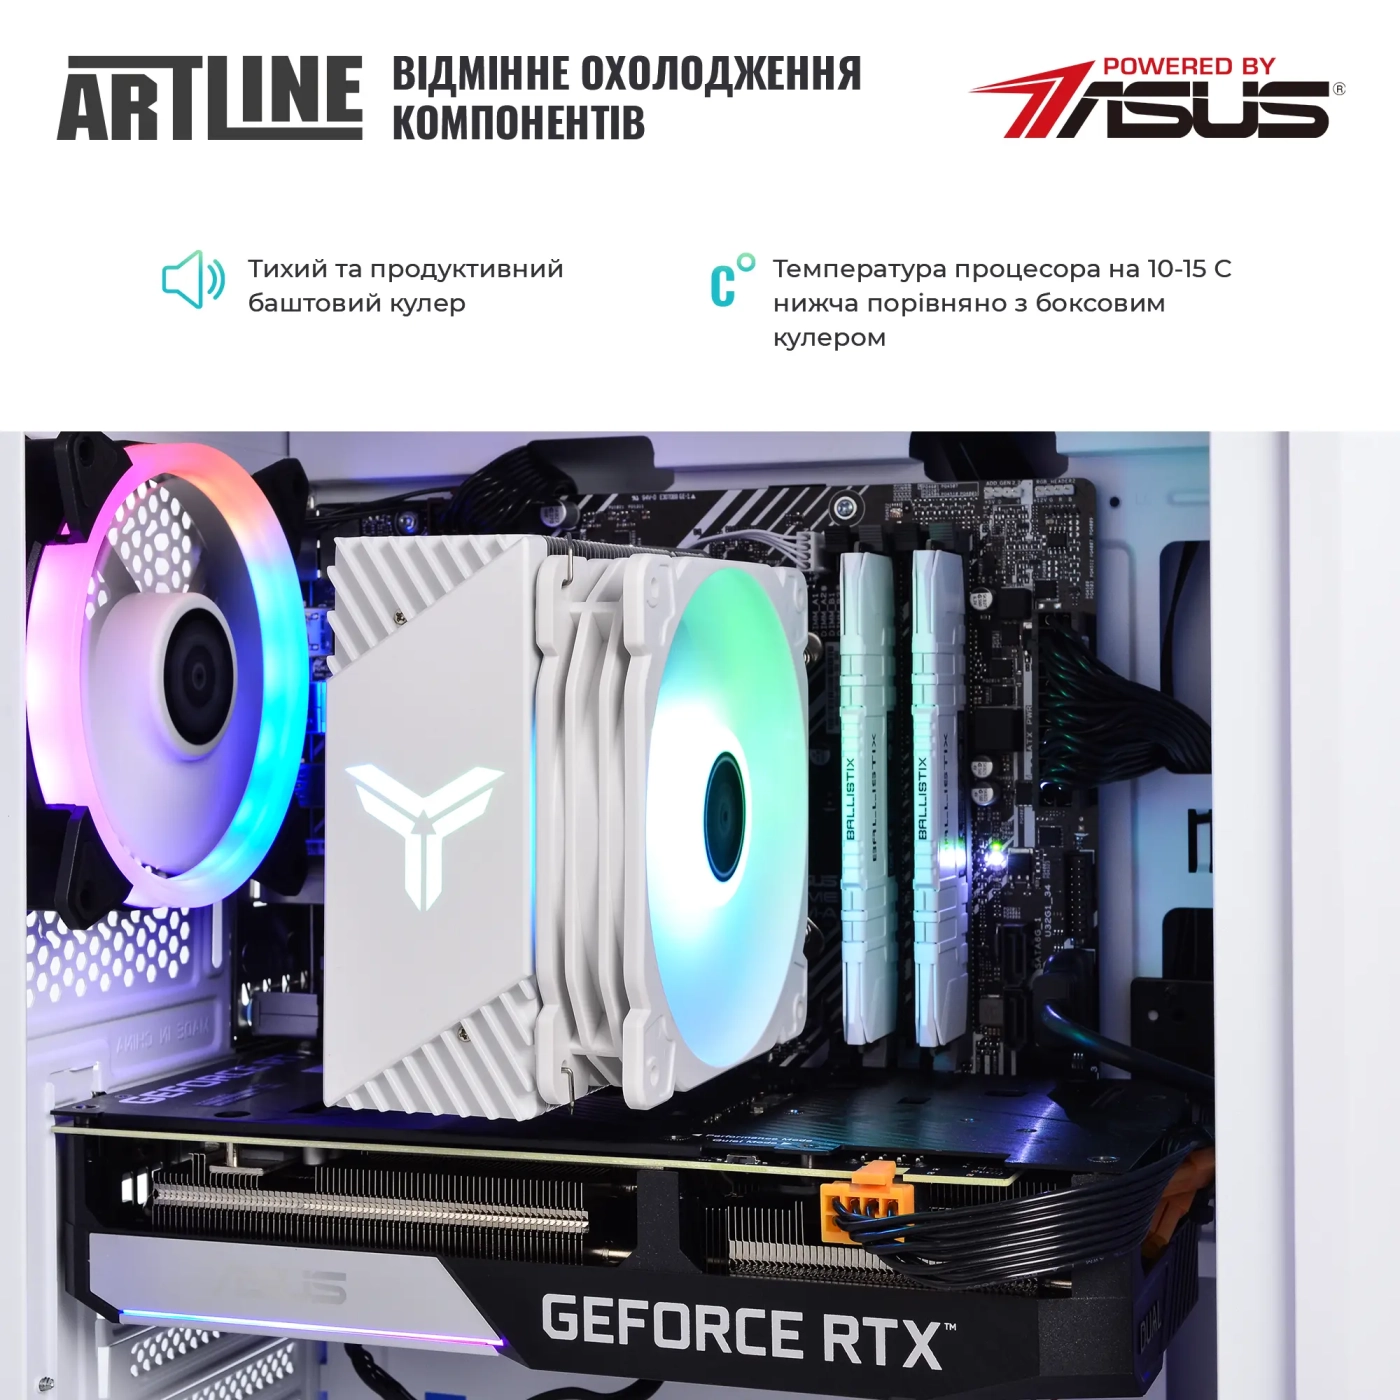 Купить Компьютер ARTLINE Gaming X49 (X49v25w) - фото 5